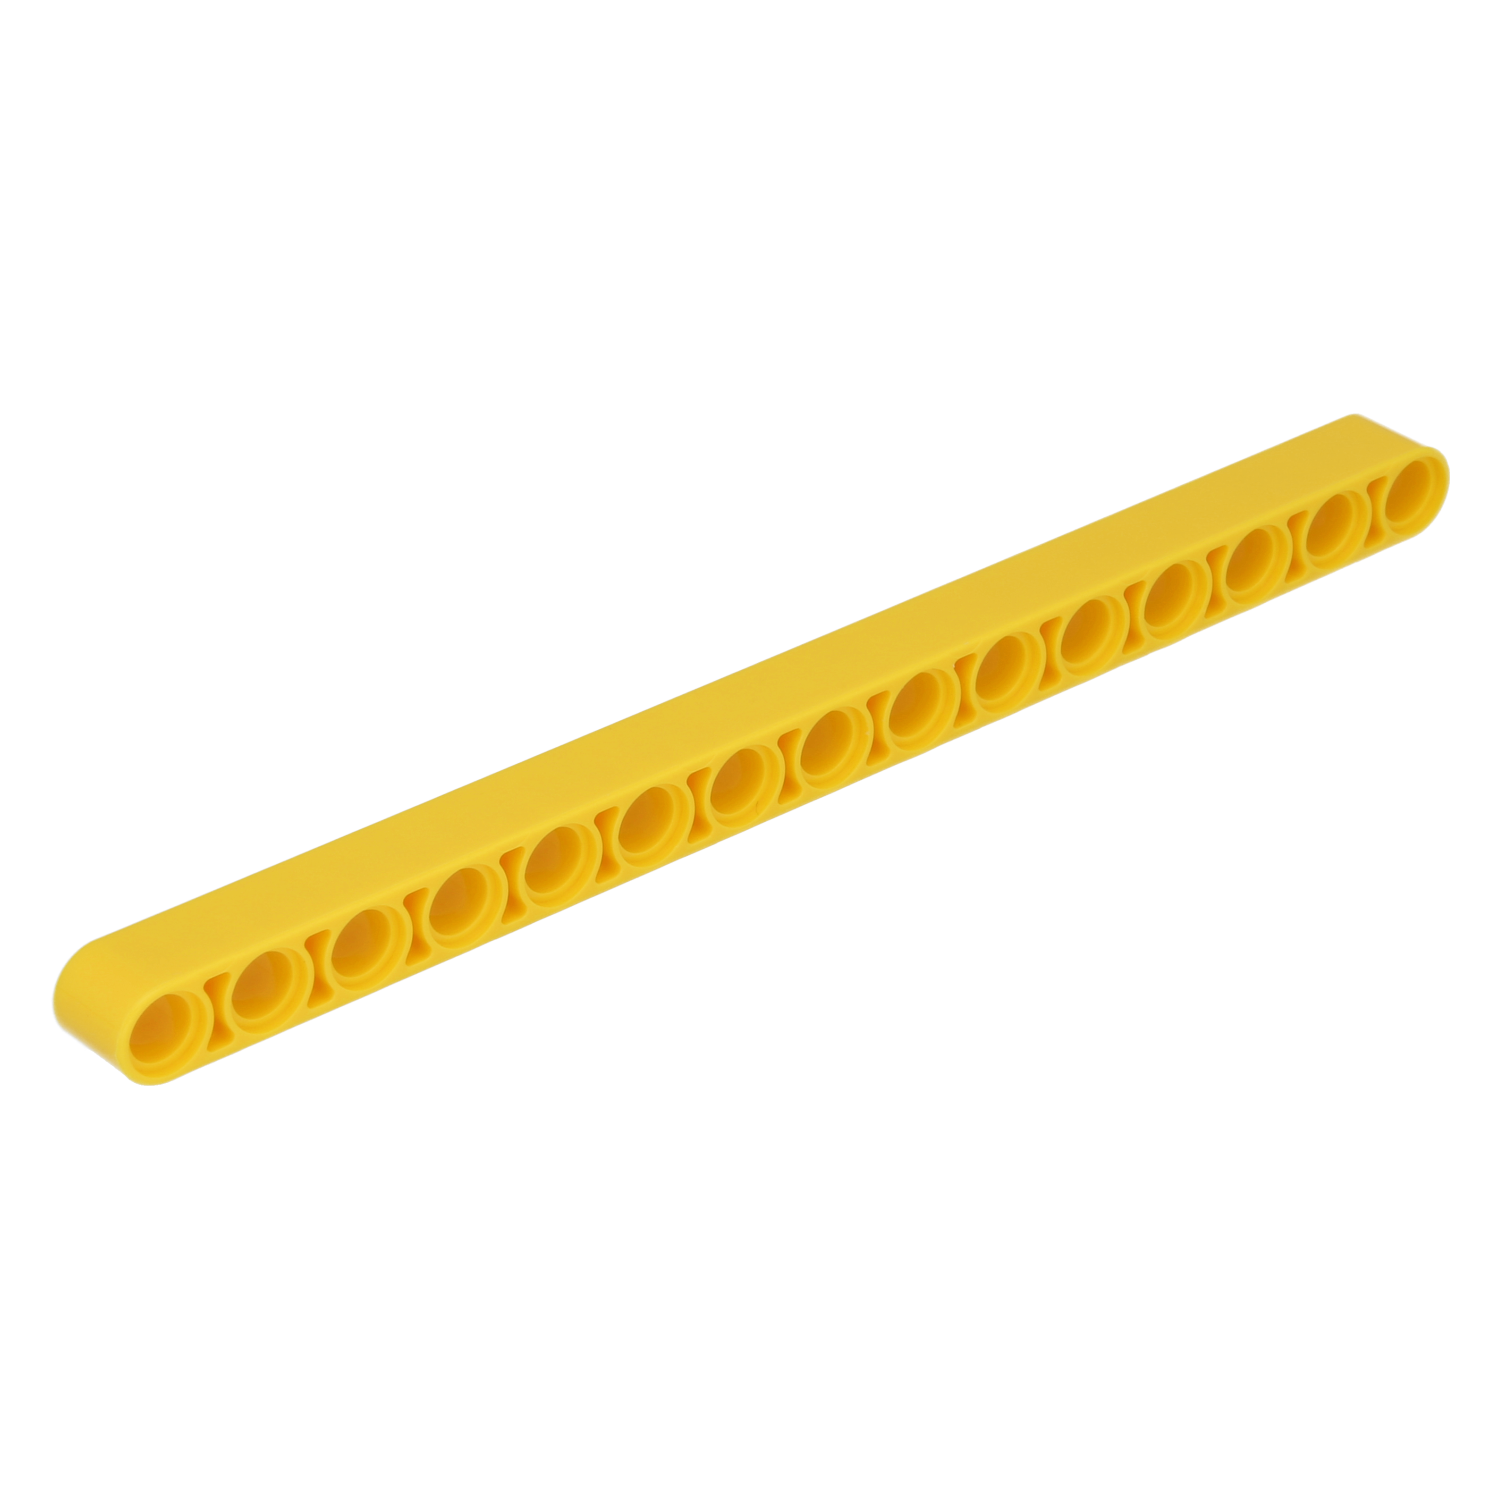 LEGO Technic Lift Arm - 1 x 15 (thick)